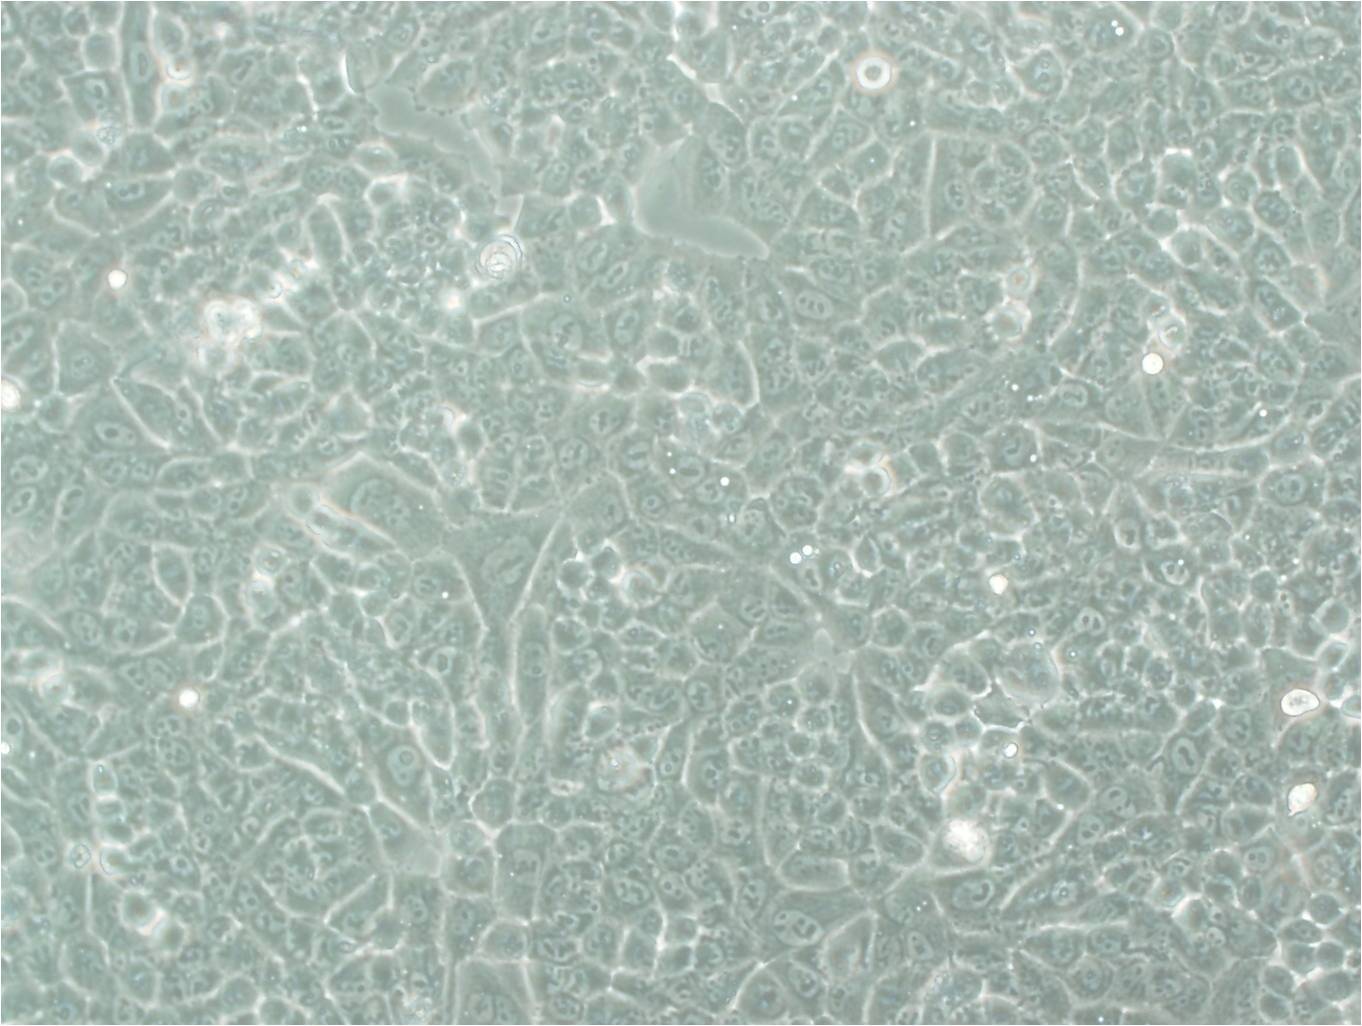 NCI-H1373 Cells|人肺癌腺癌需消化细胞系